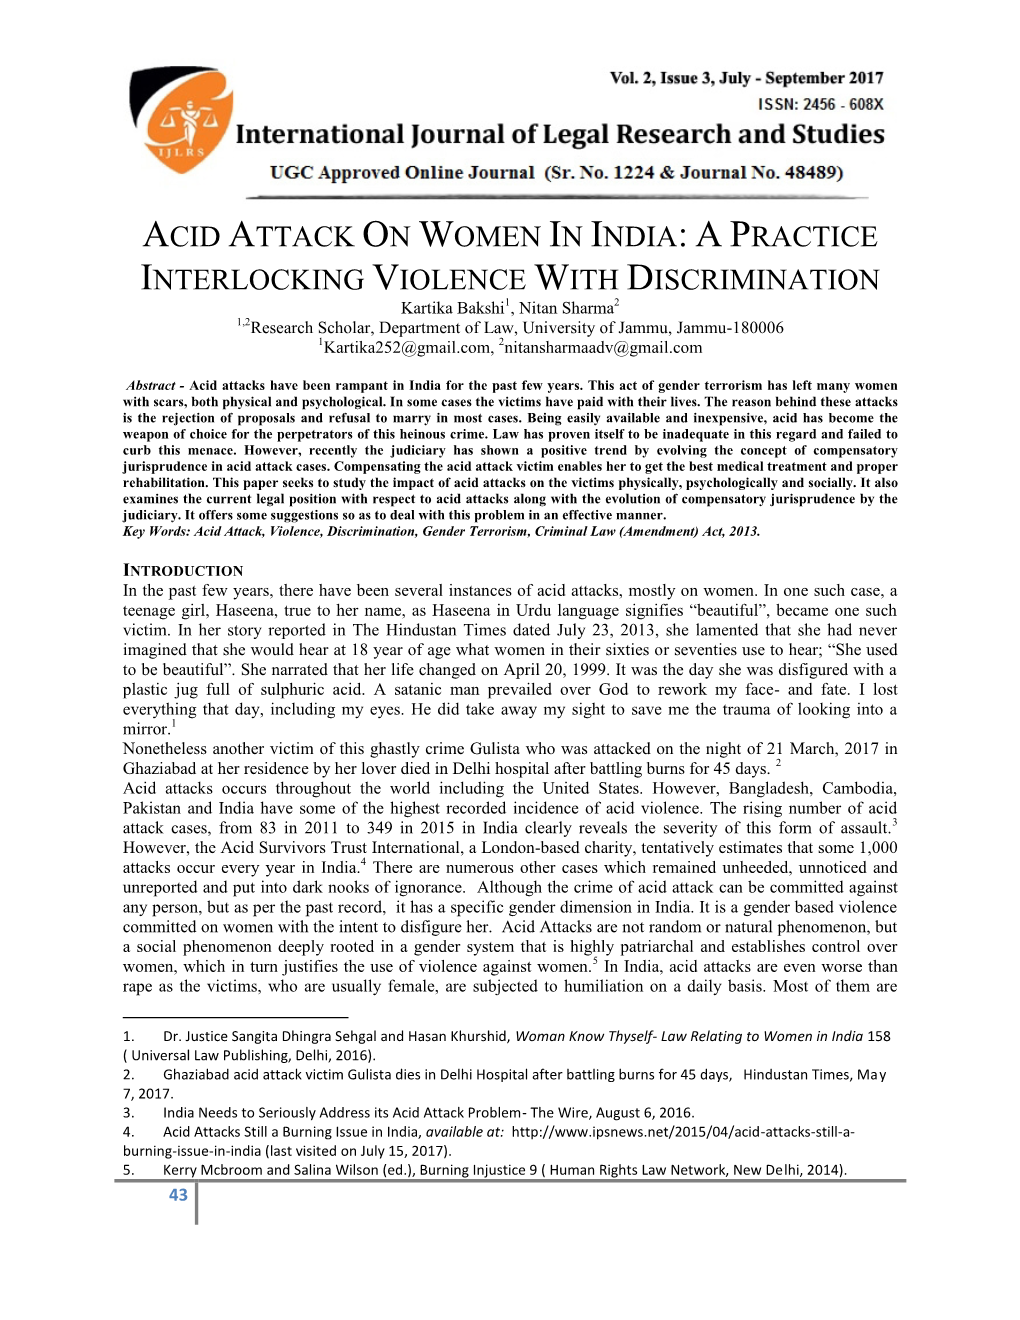 Acid Attack on Women in India:Apractice